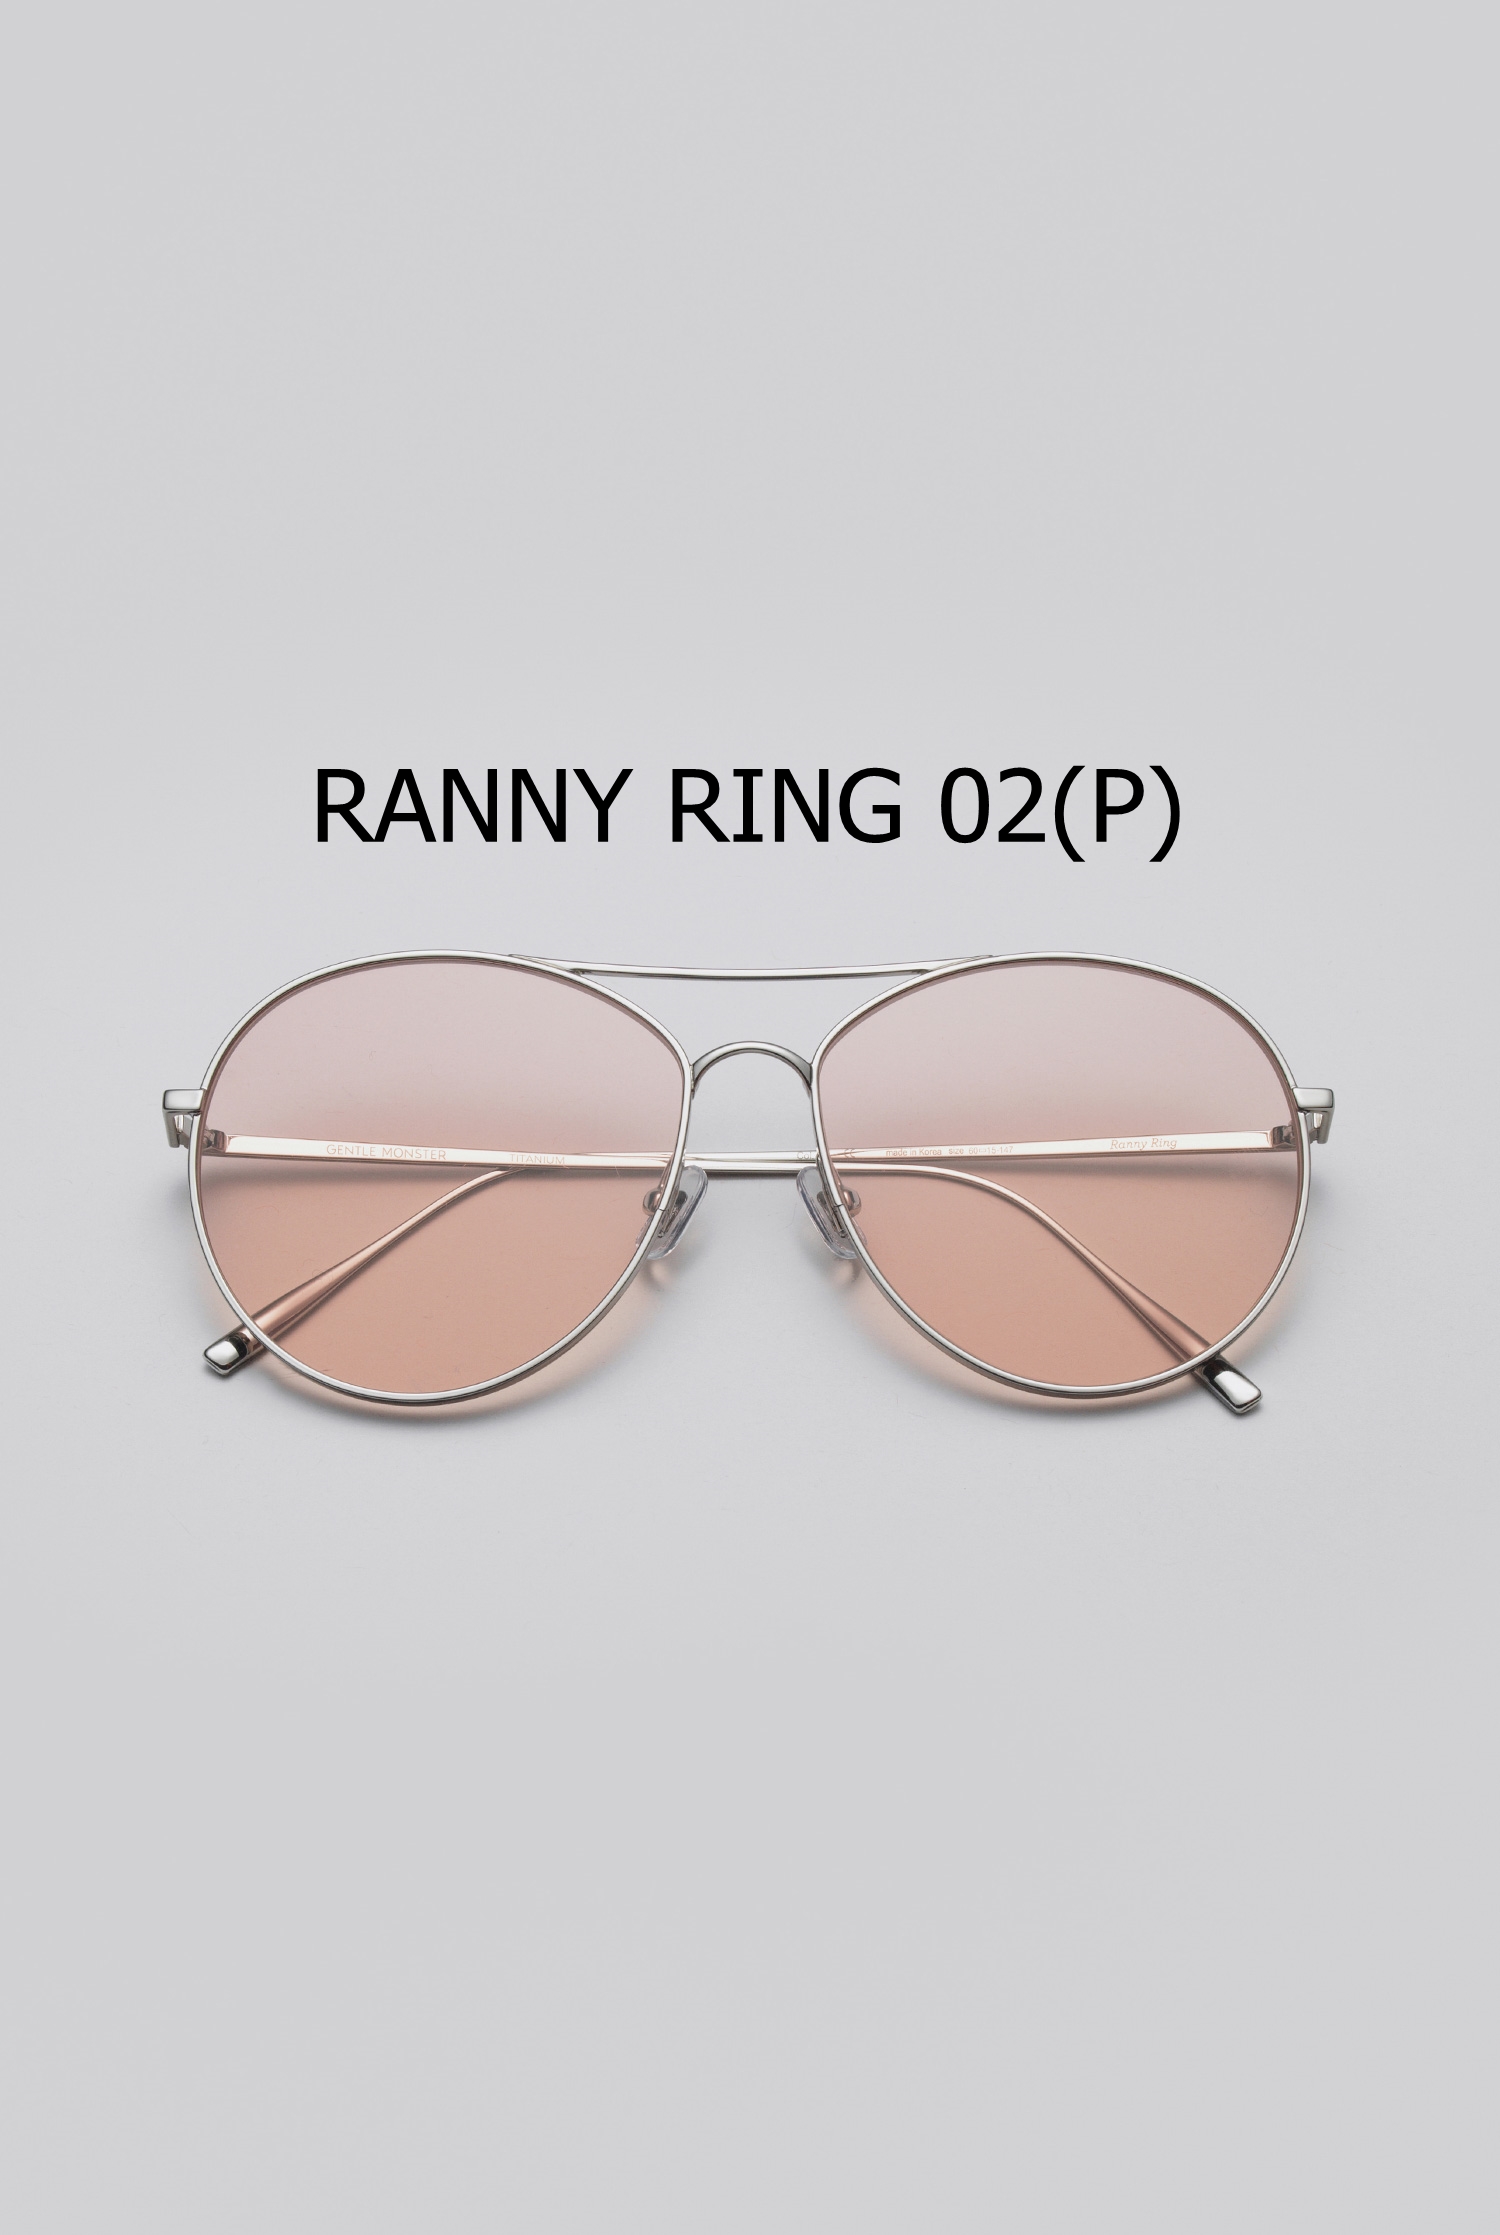 RANNY RING 02(P)